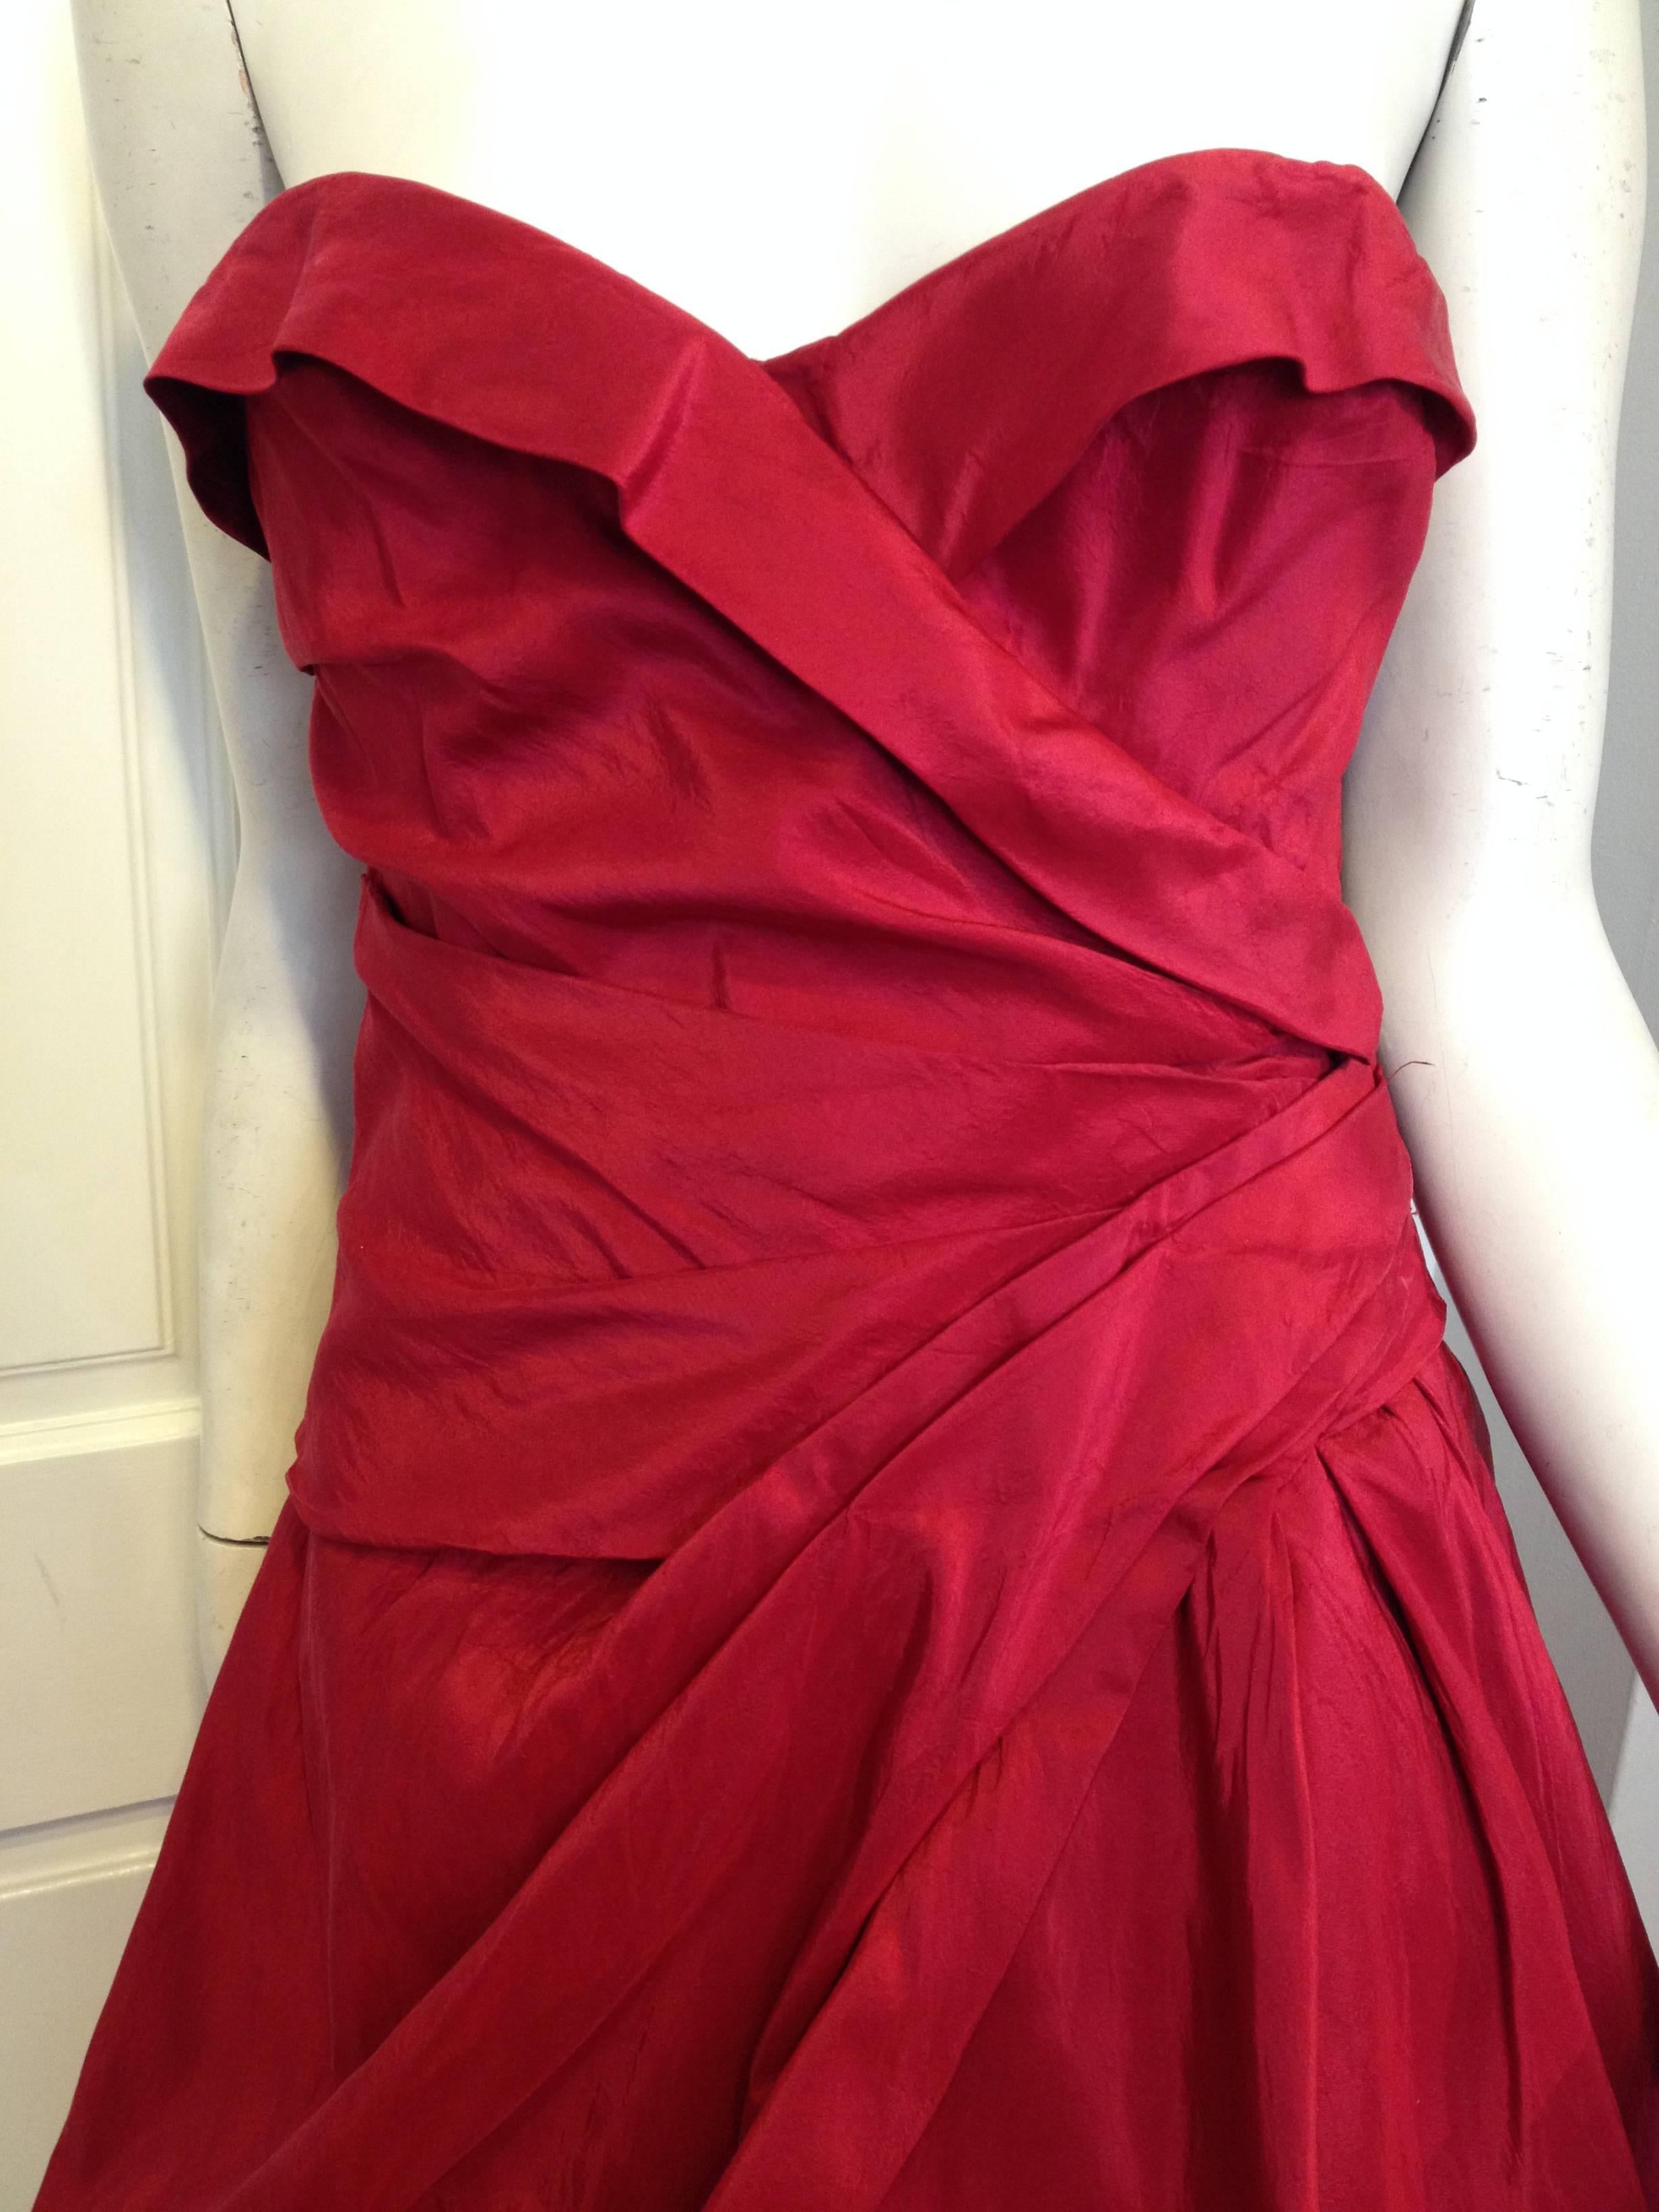 Women's Monique Lhullier Red Silk Ball Gown